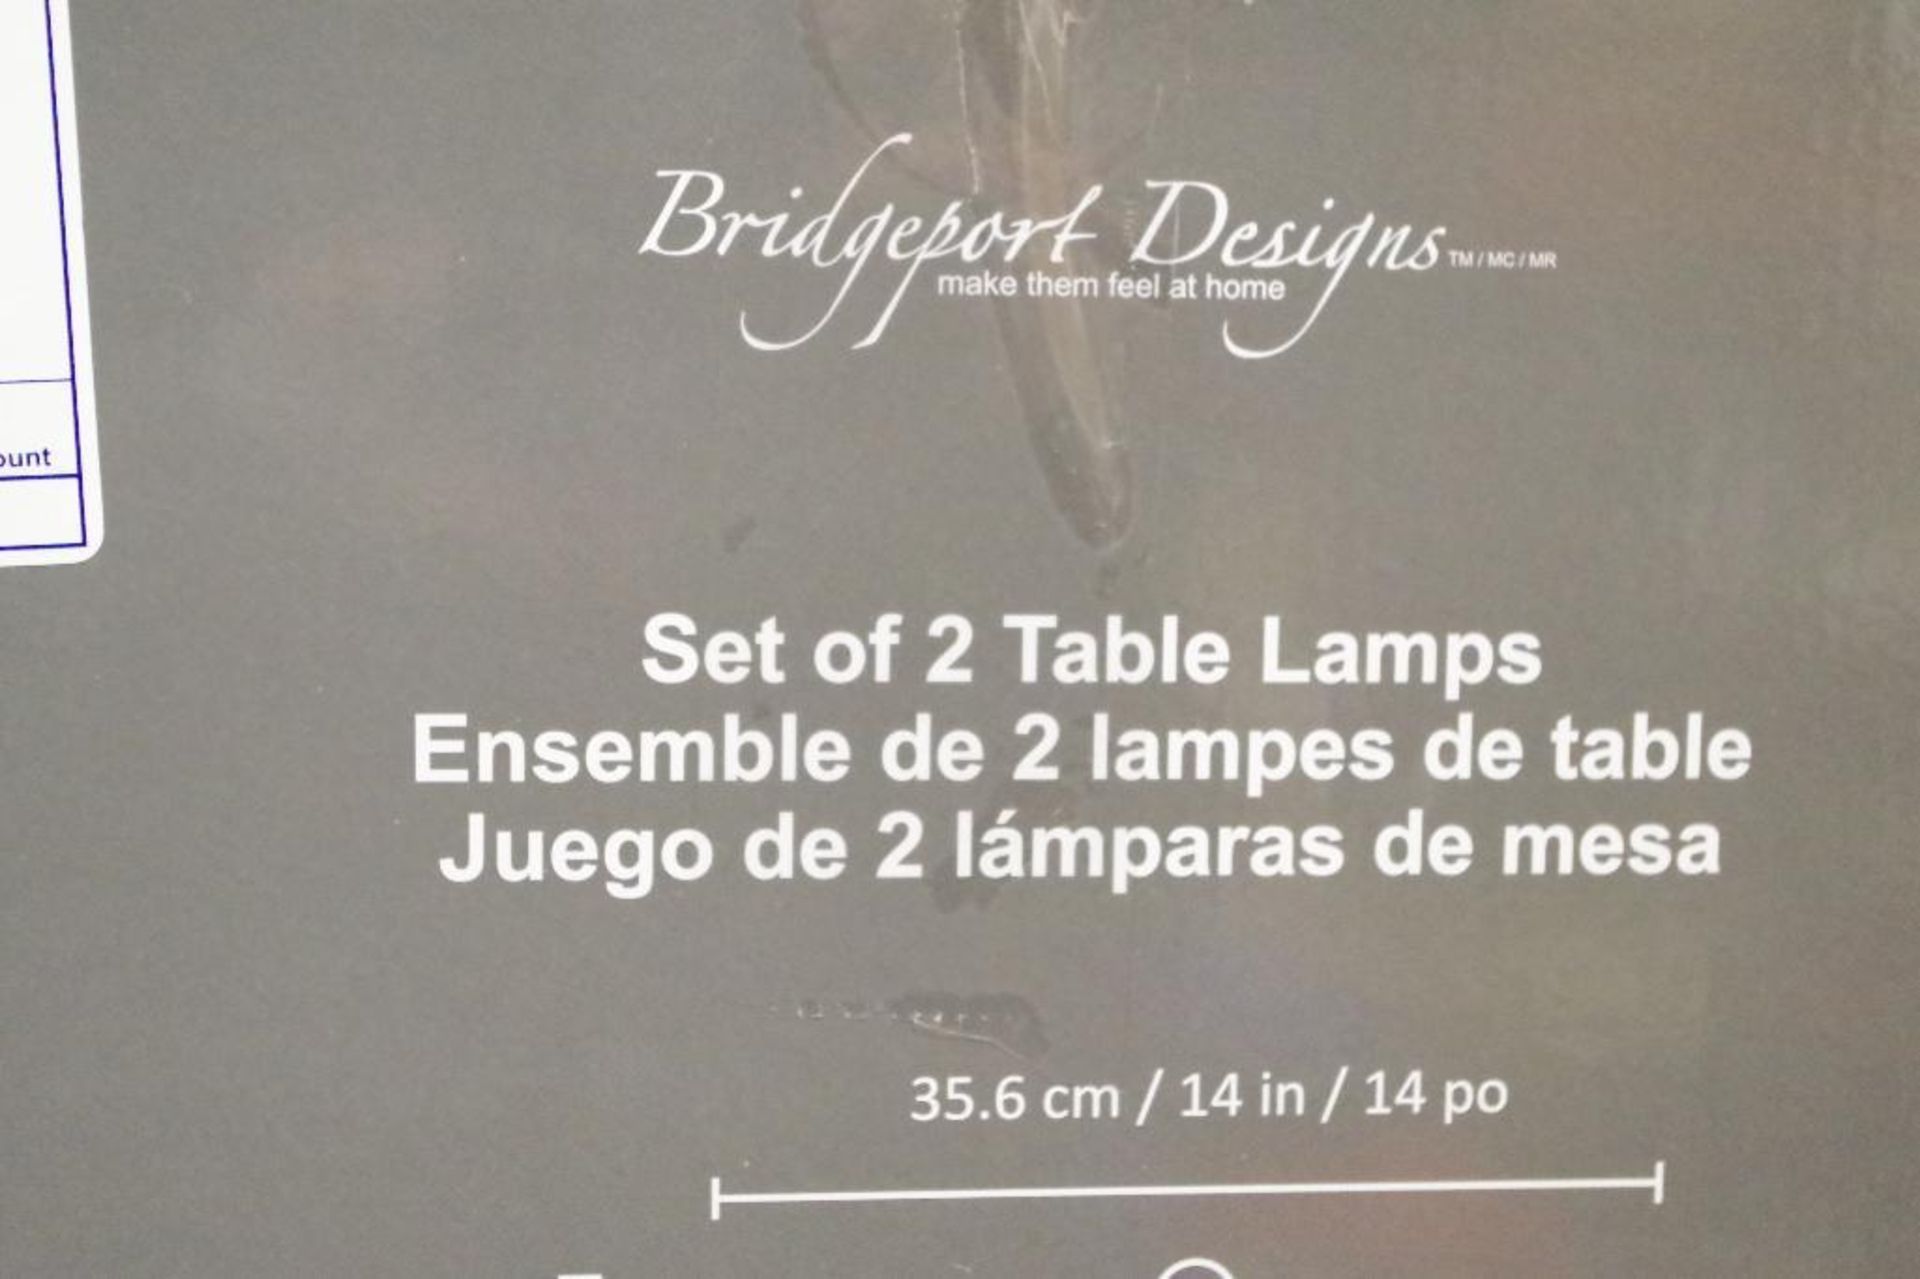 BRIDGEPORT DESIGNS Set of 2 Table Lamps - Image 2 of 3